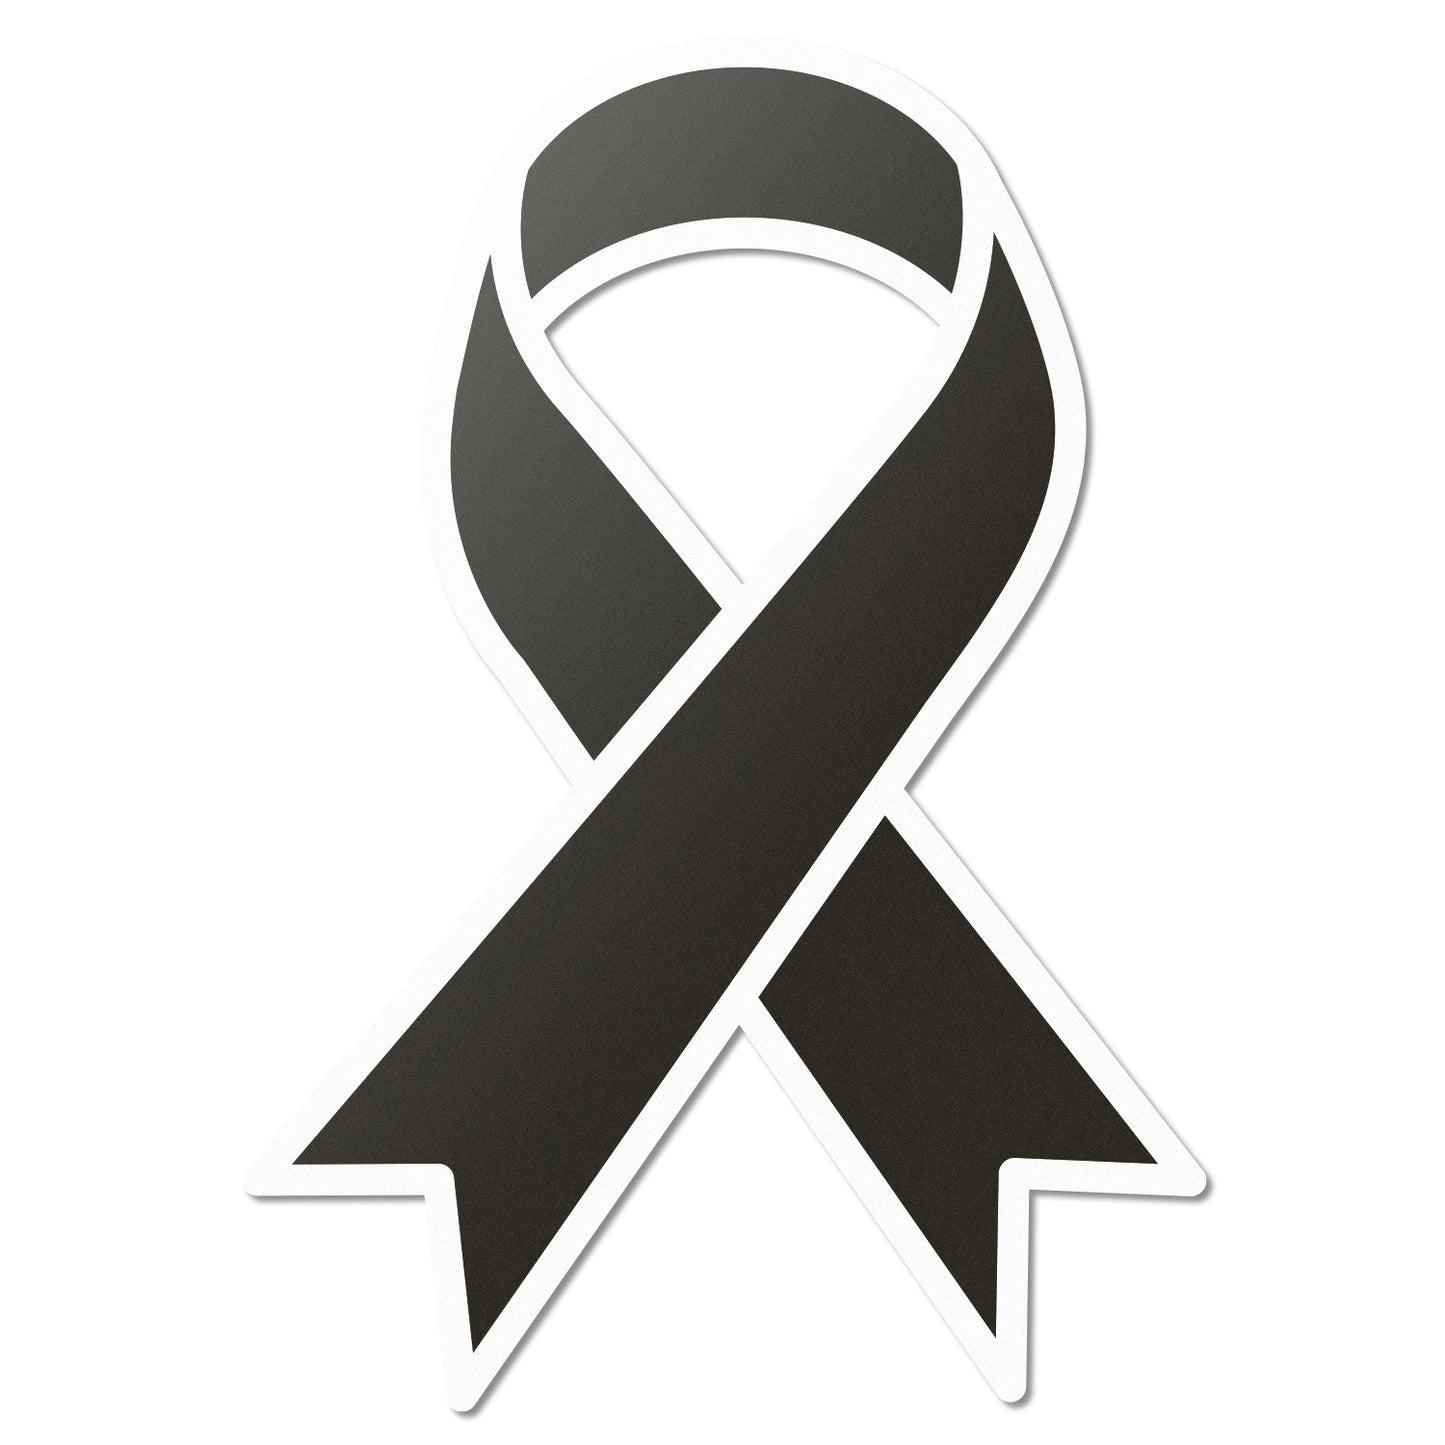 2.2 x 1.6 inch | Awareness: Melanoma & POW/MIA Awareness Ribbon Stickers